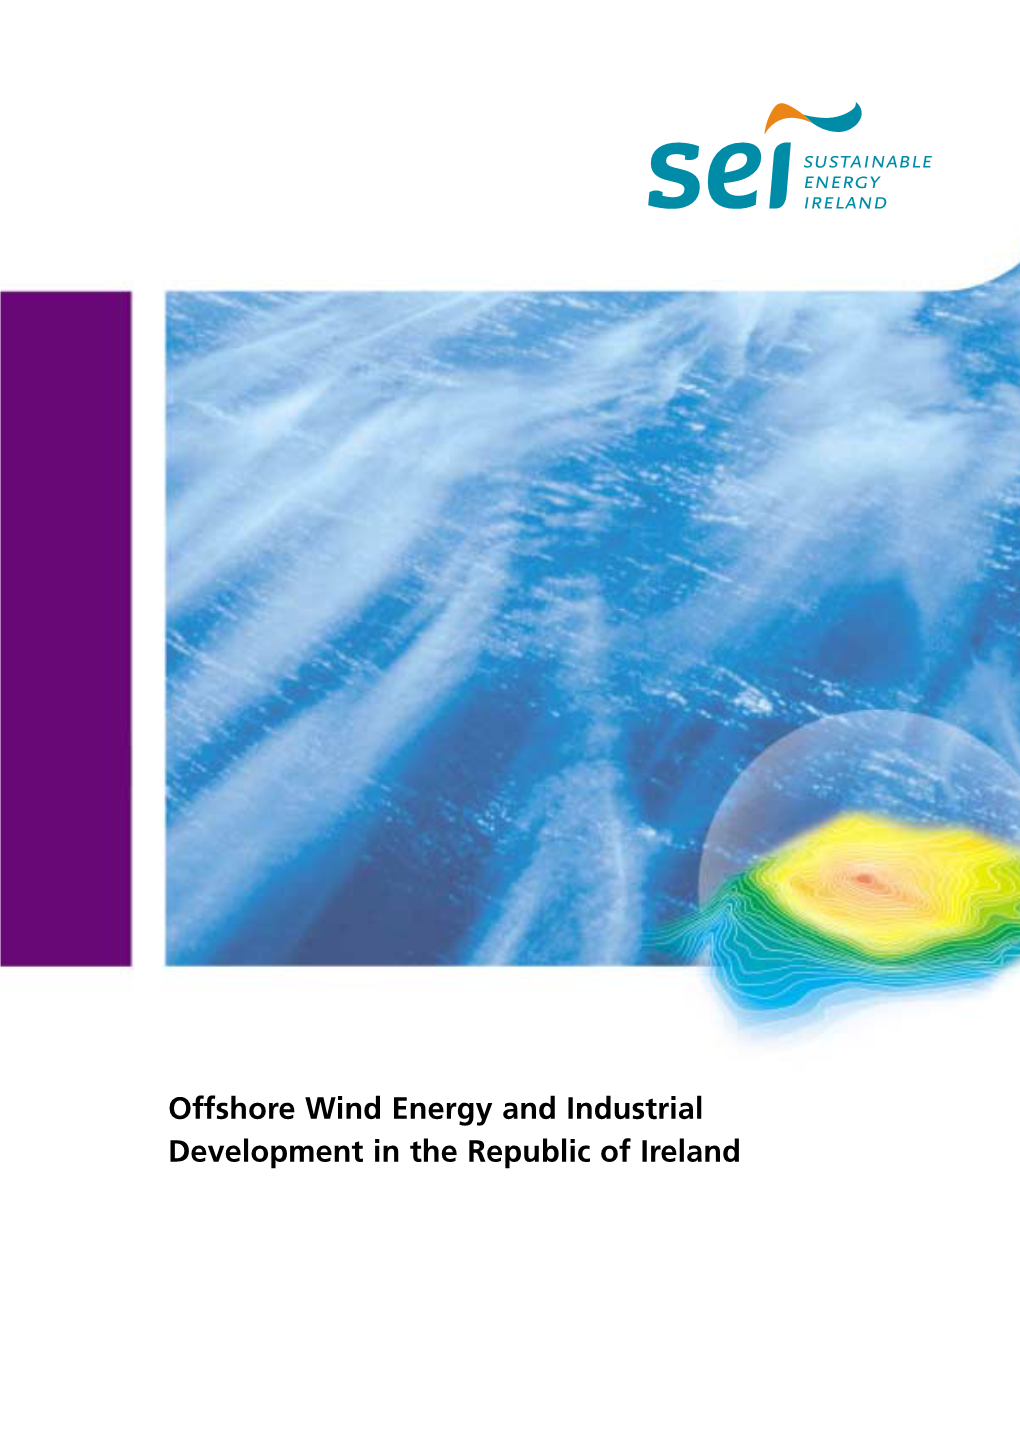 Offshore Wind Energy and Industrial Development in Ireland